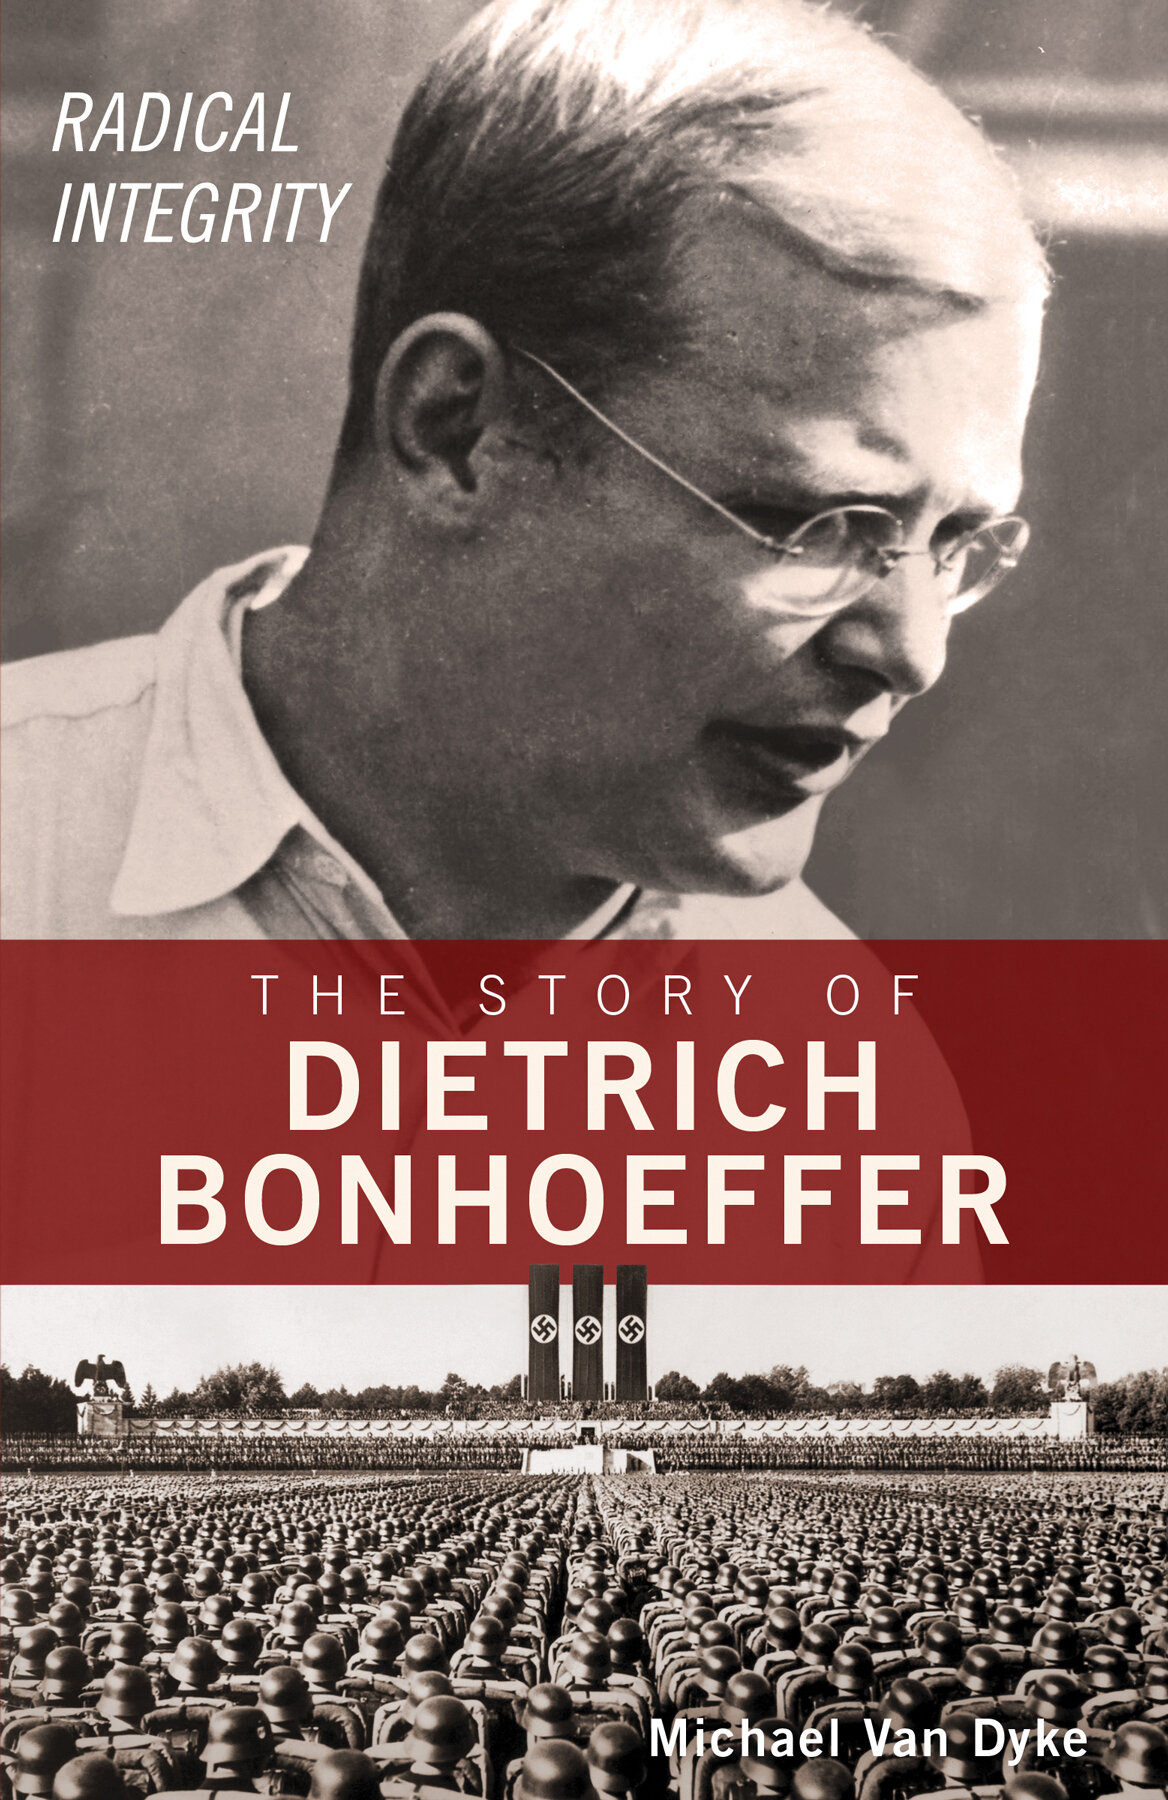 Radical Integrity: The Story of Dietrich Bonhoeffer